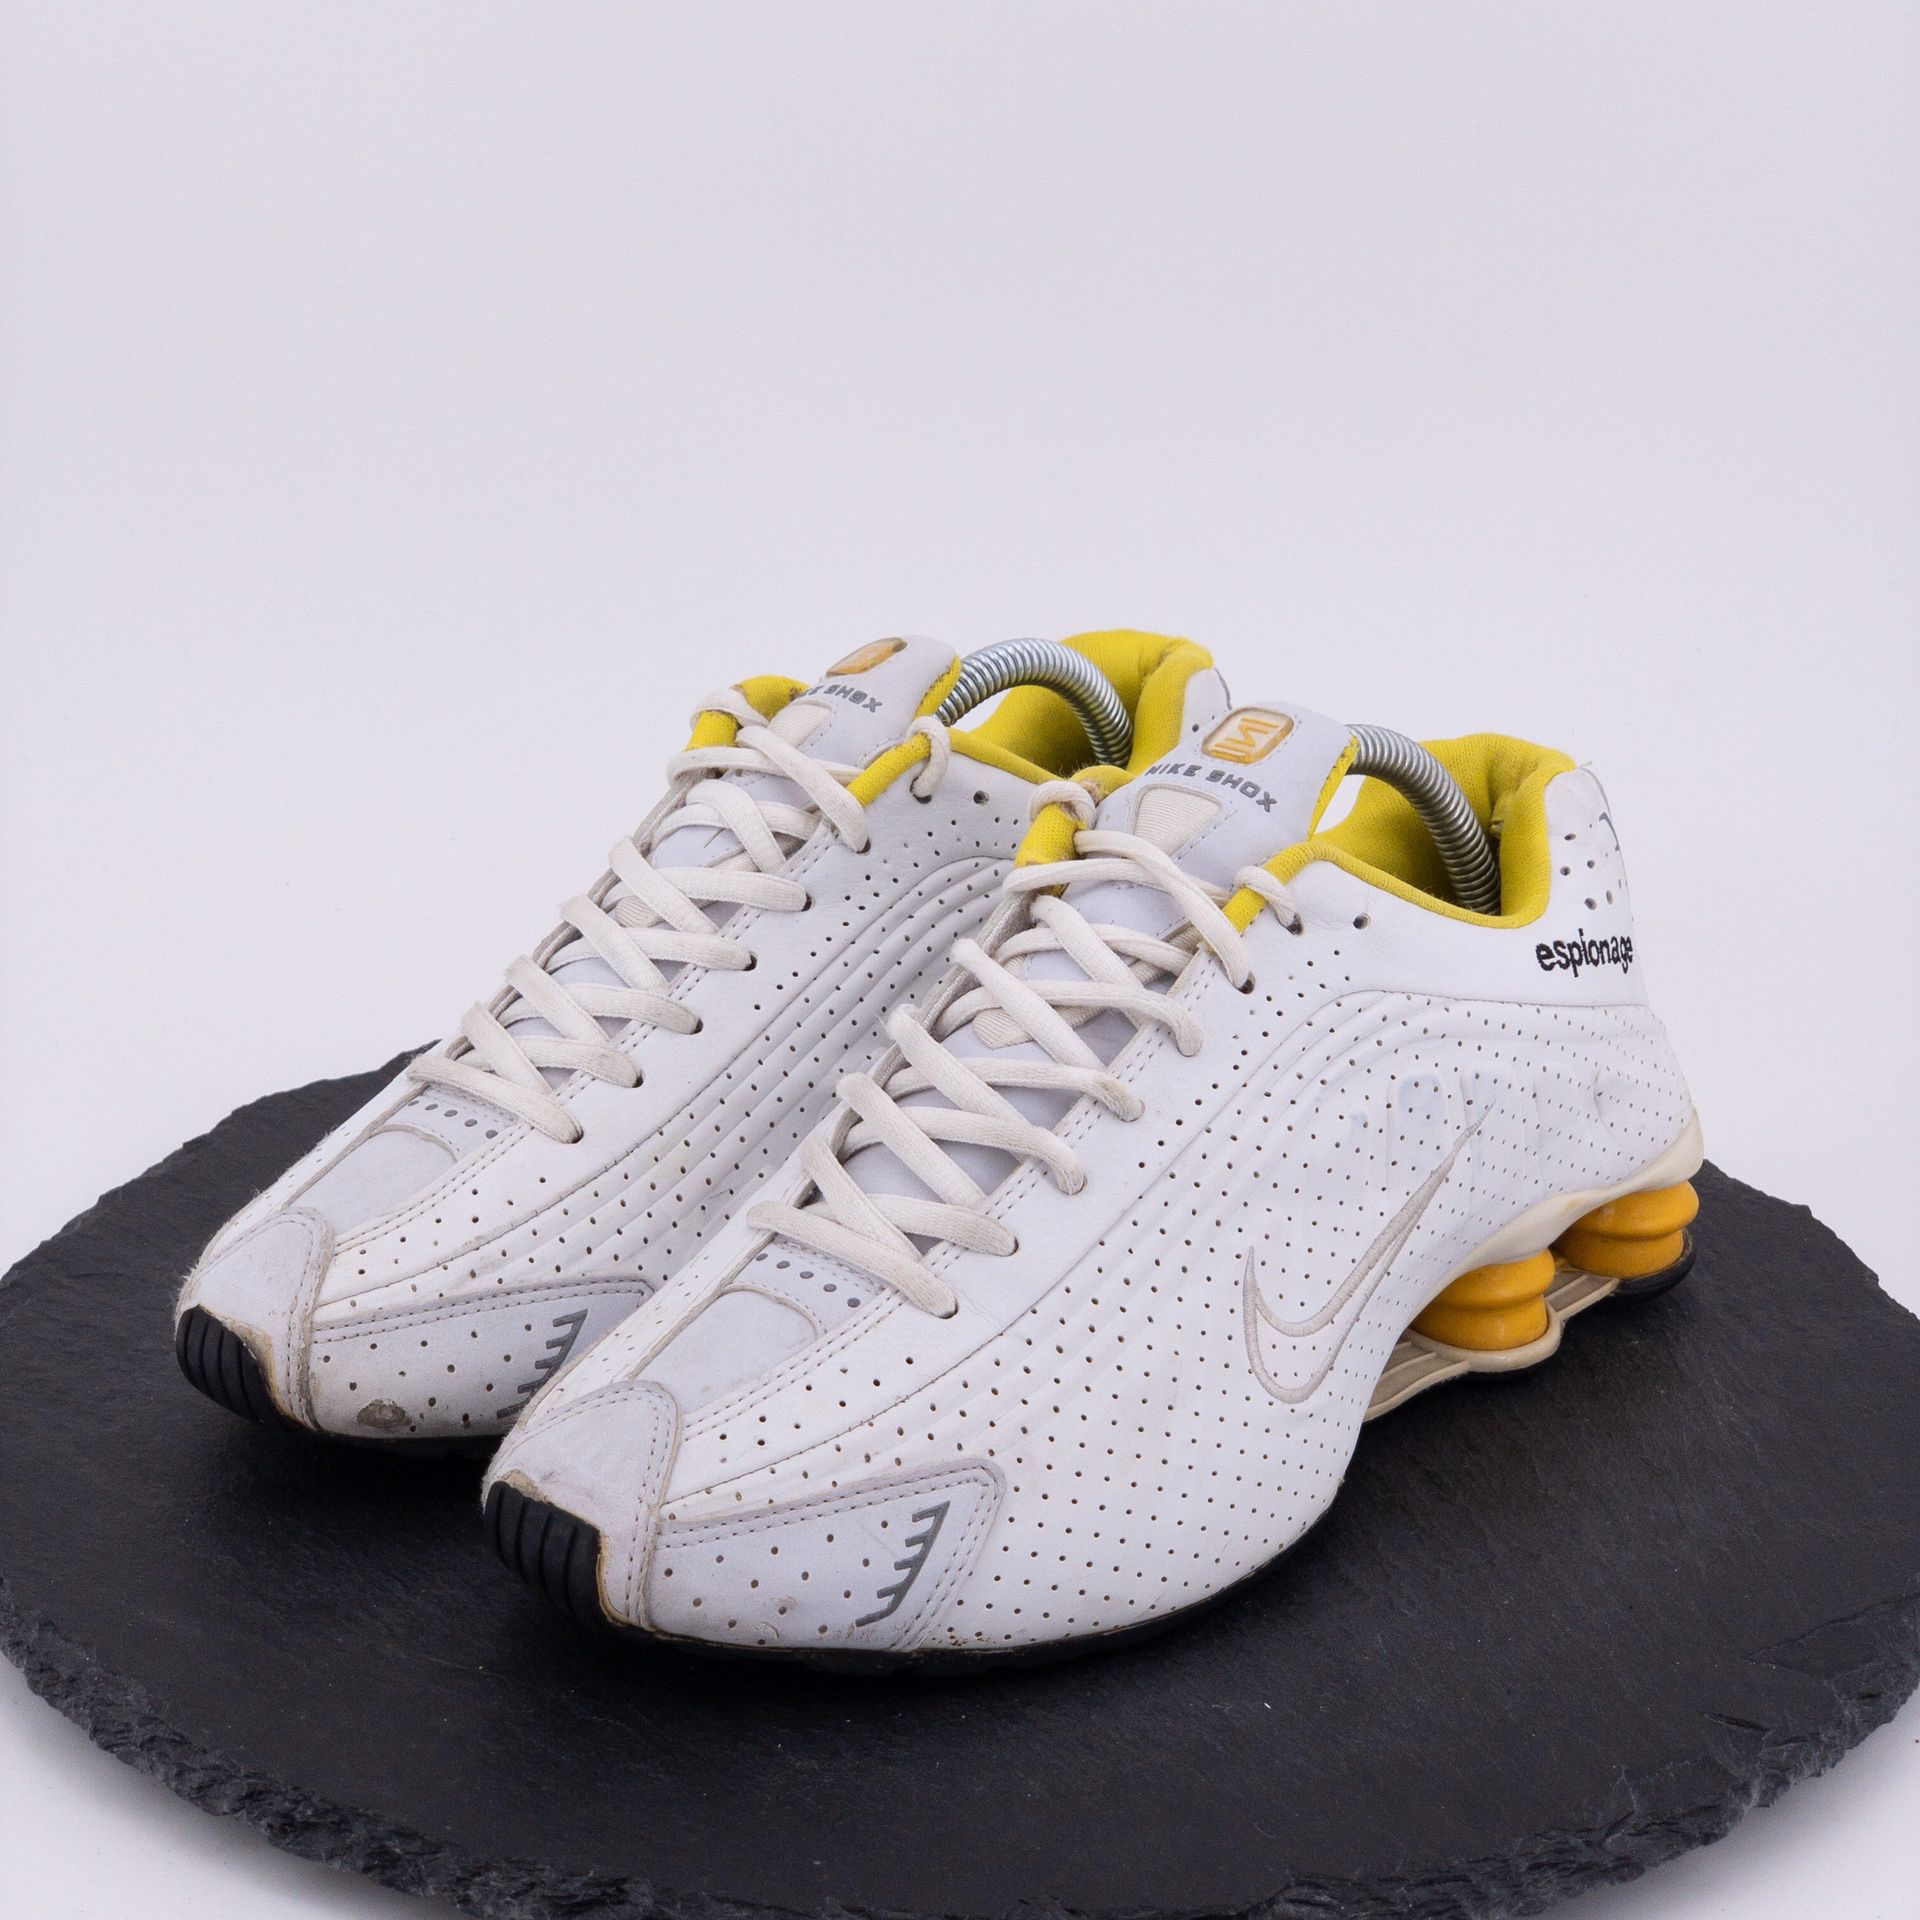 Nike Shox R4 Womens Shoes Size 10